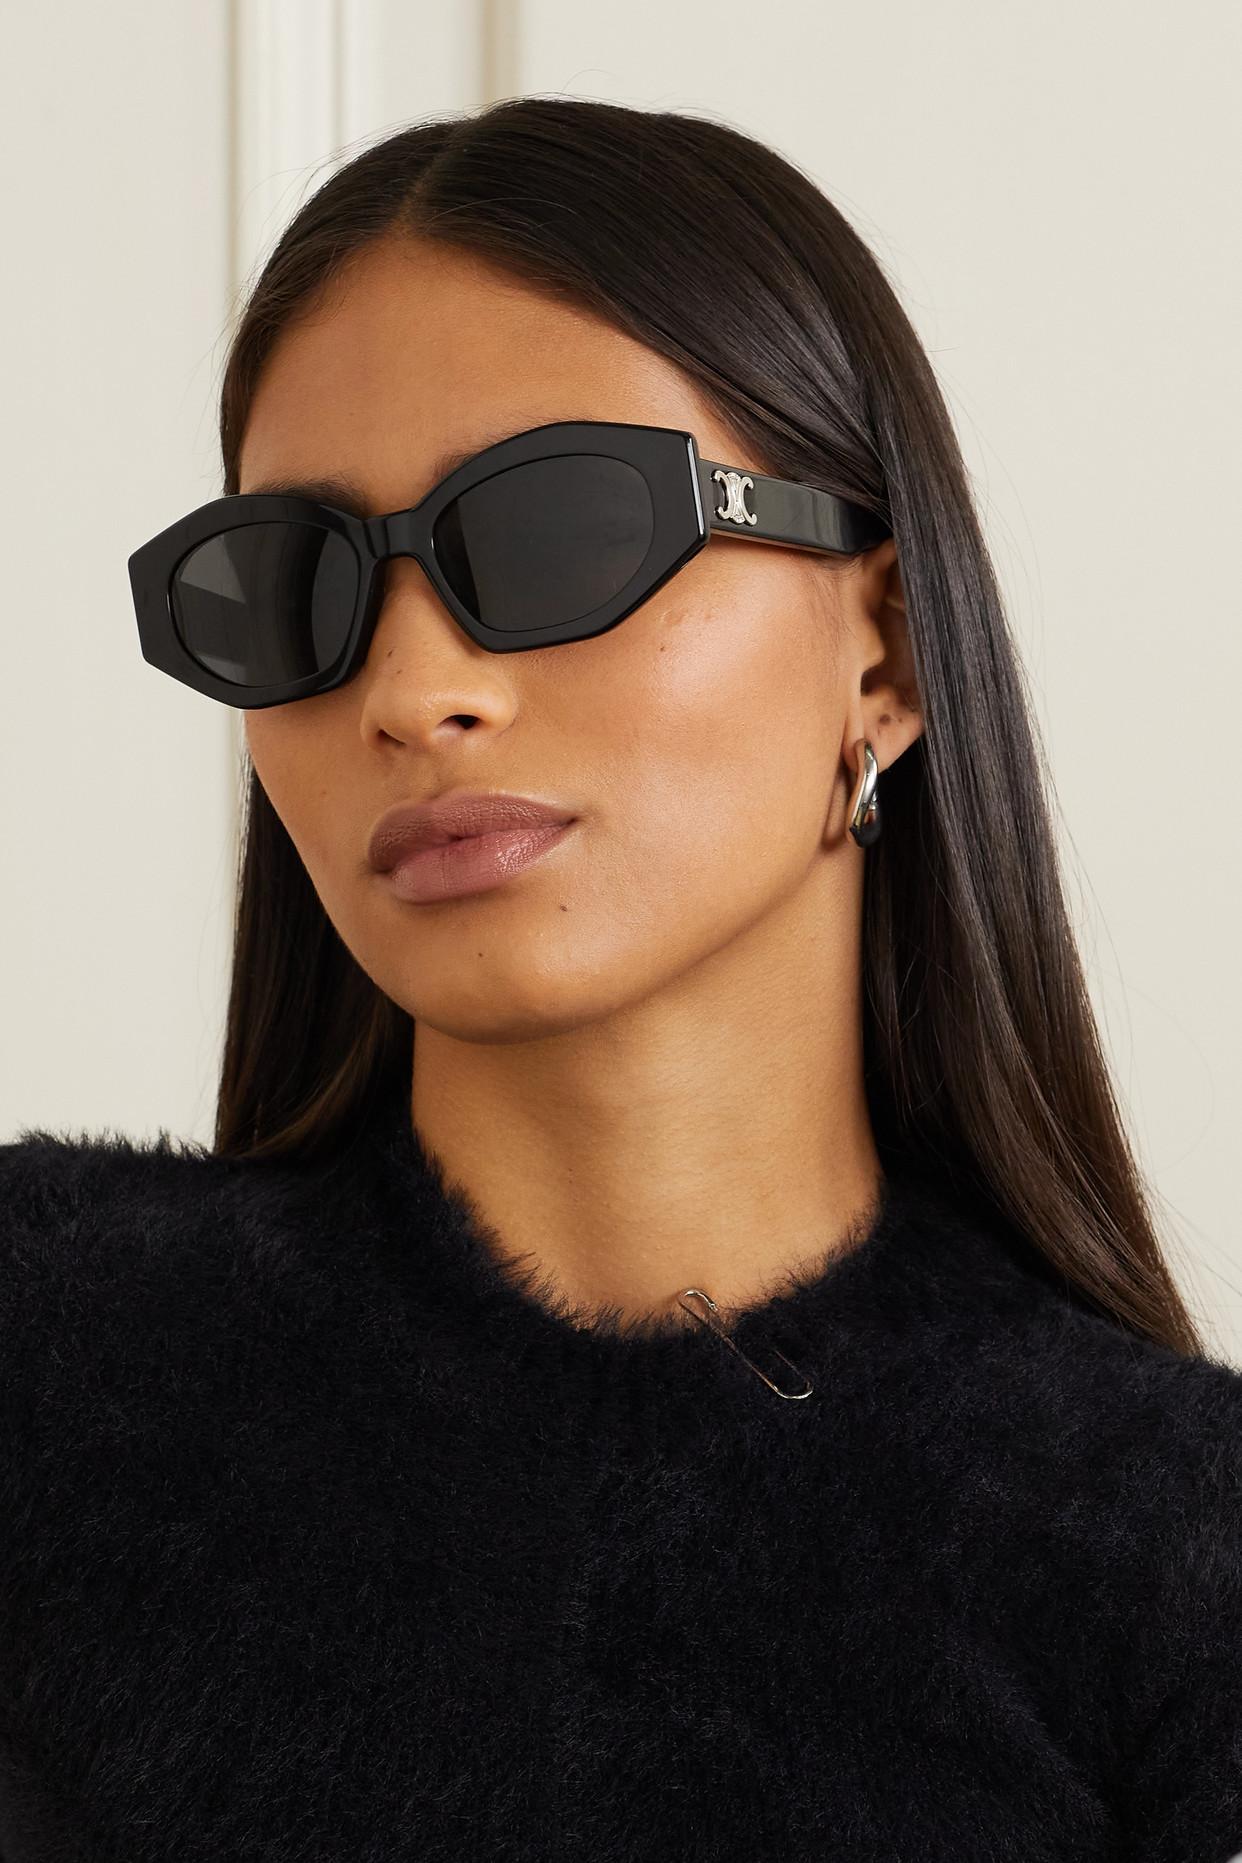 Celine Triomphe Cat-eye Acetate Sunglasses in Black